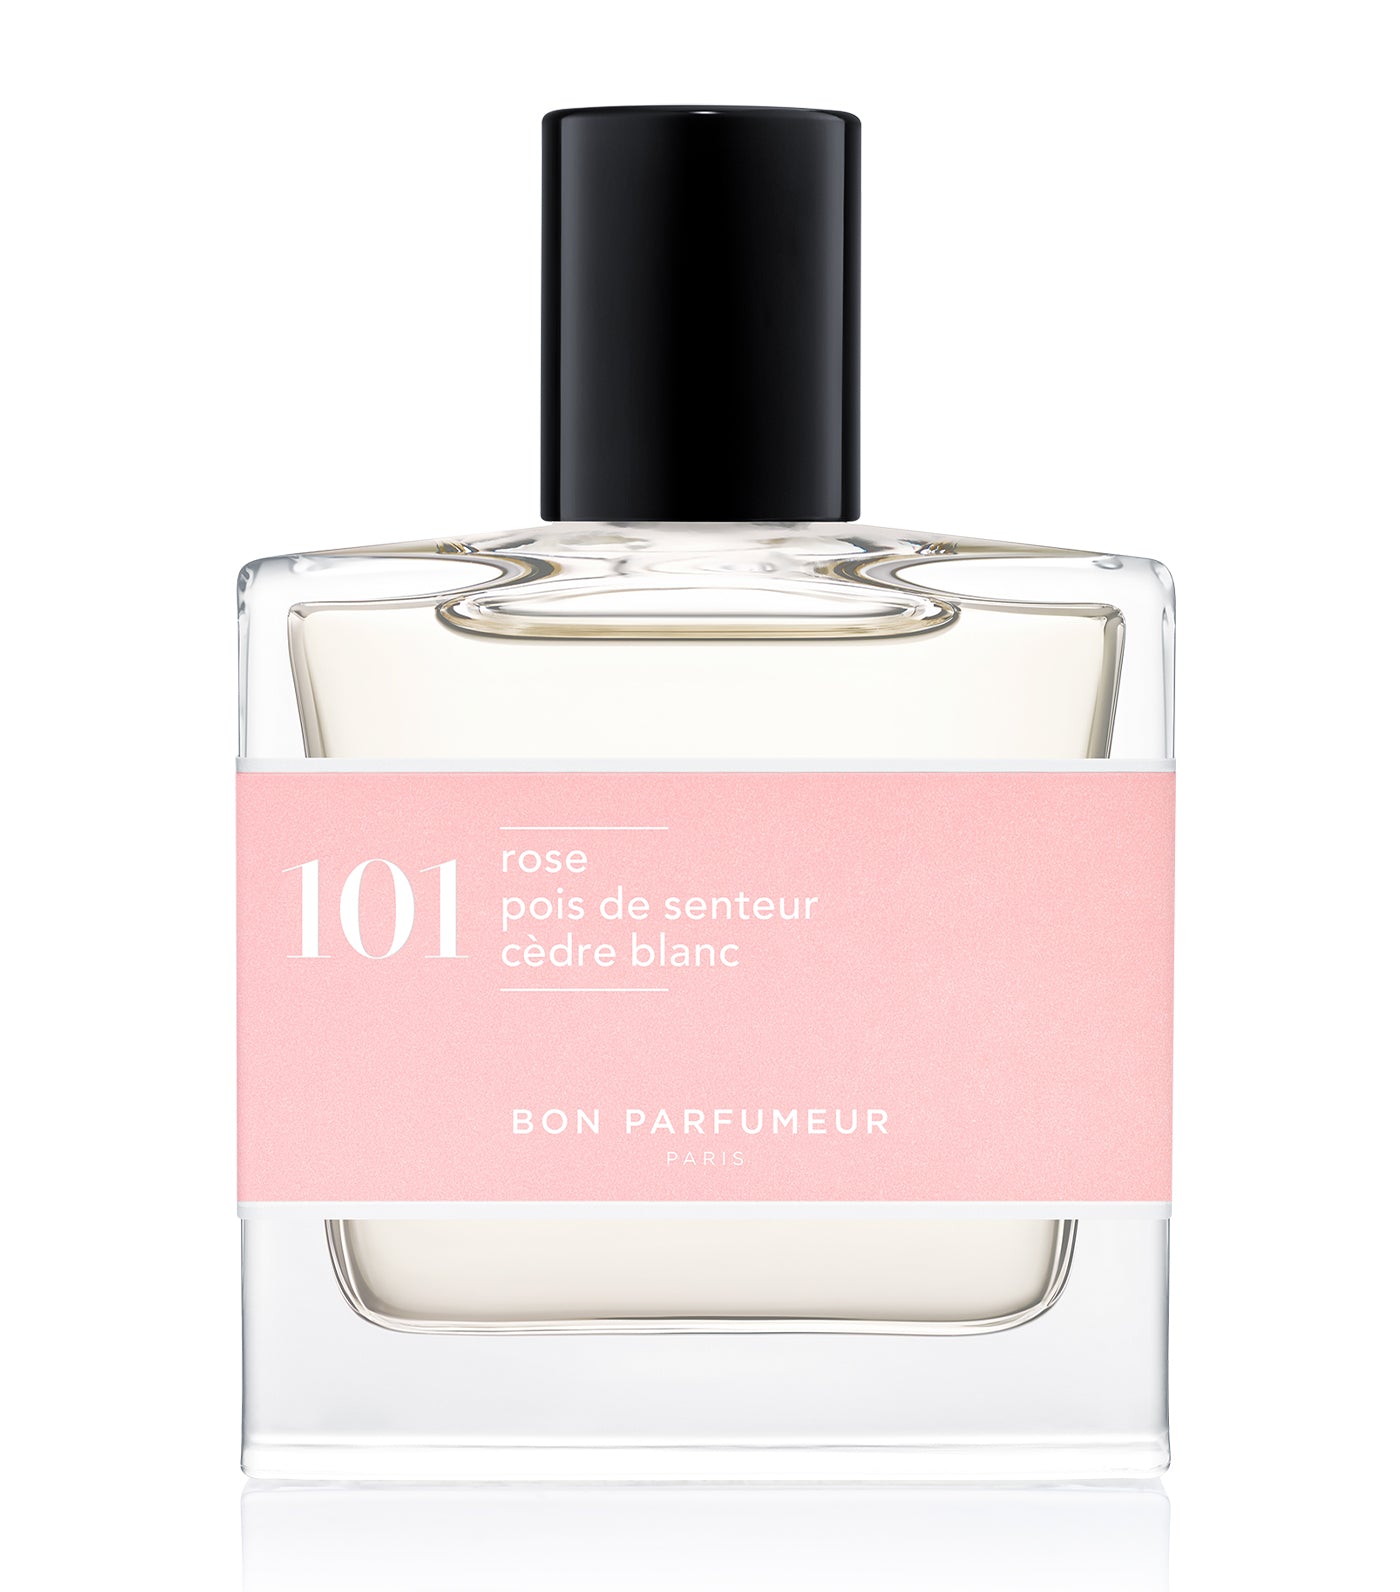 Eau de parfum 101 : rose, sweet pea and white cedar